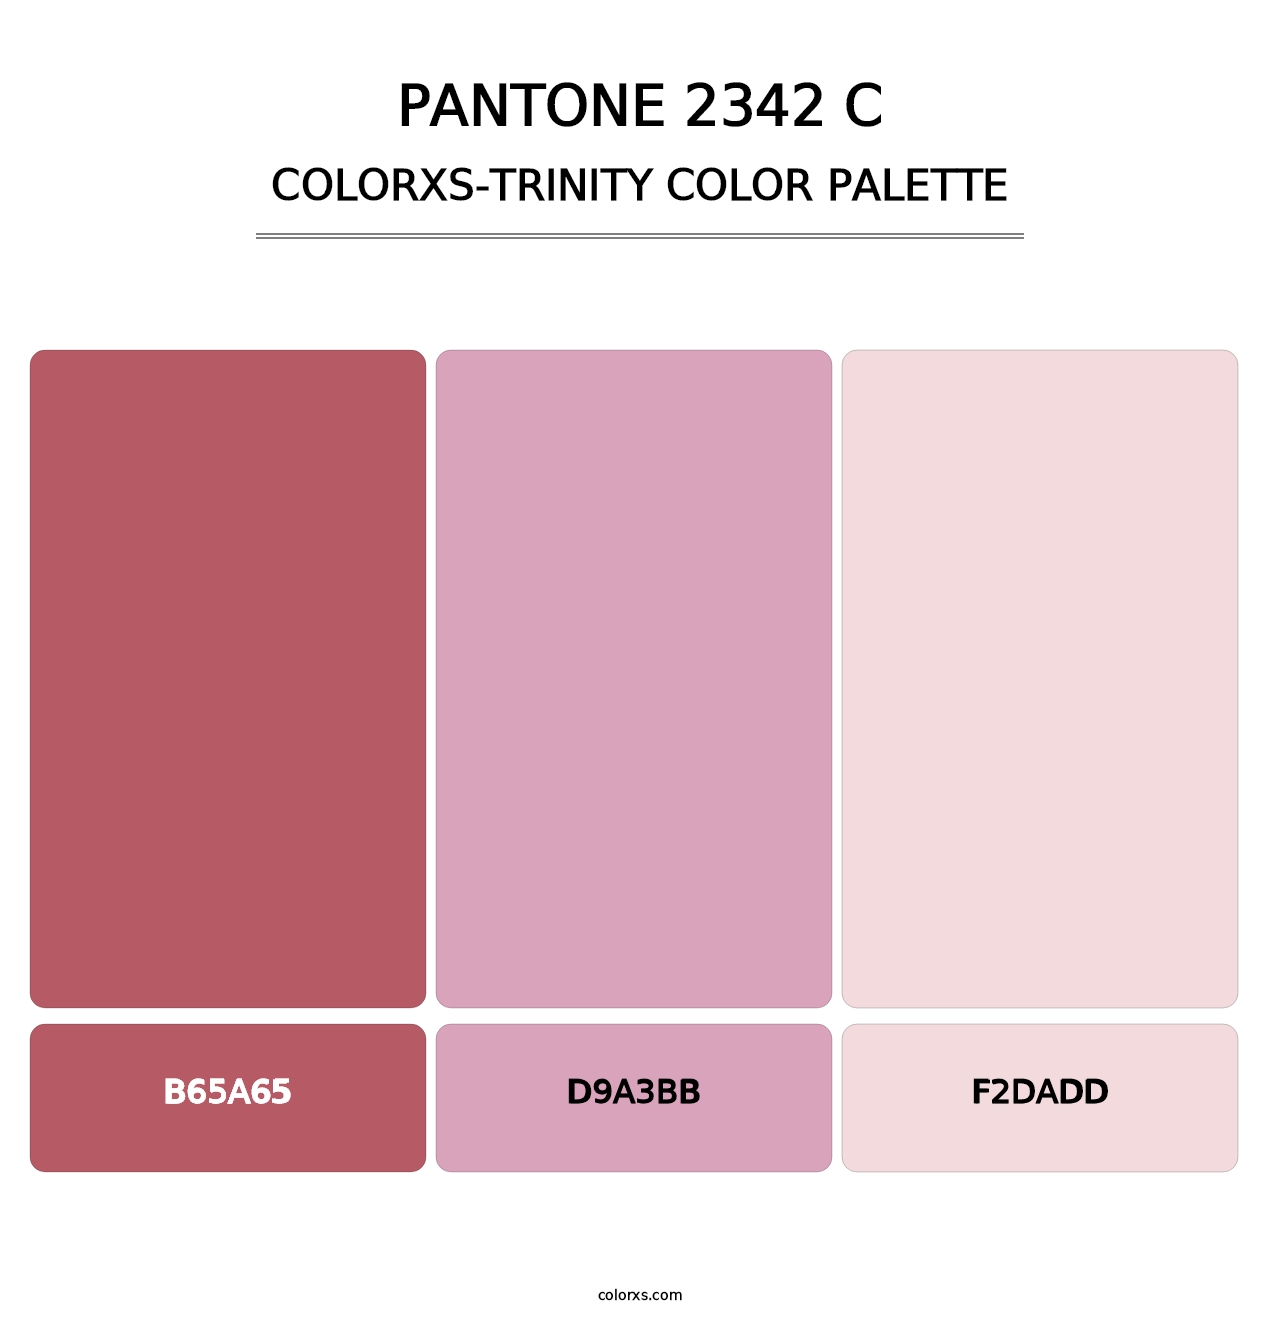 PANTONE 2342 C - Colorxs Trinity Palette